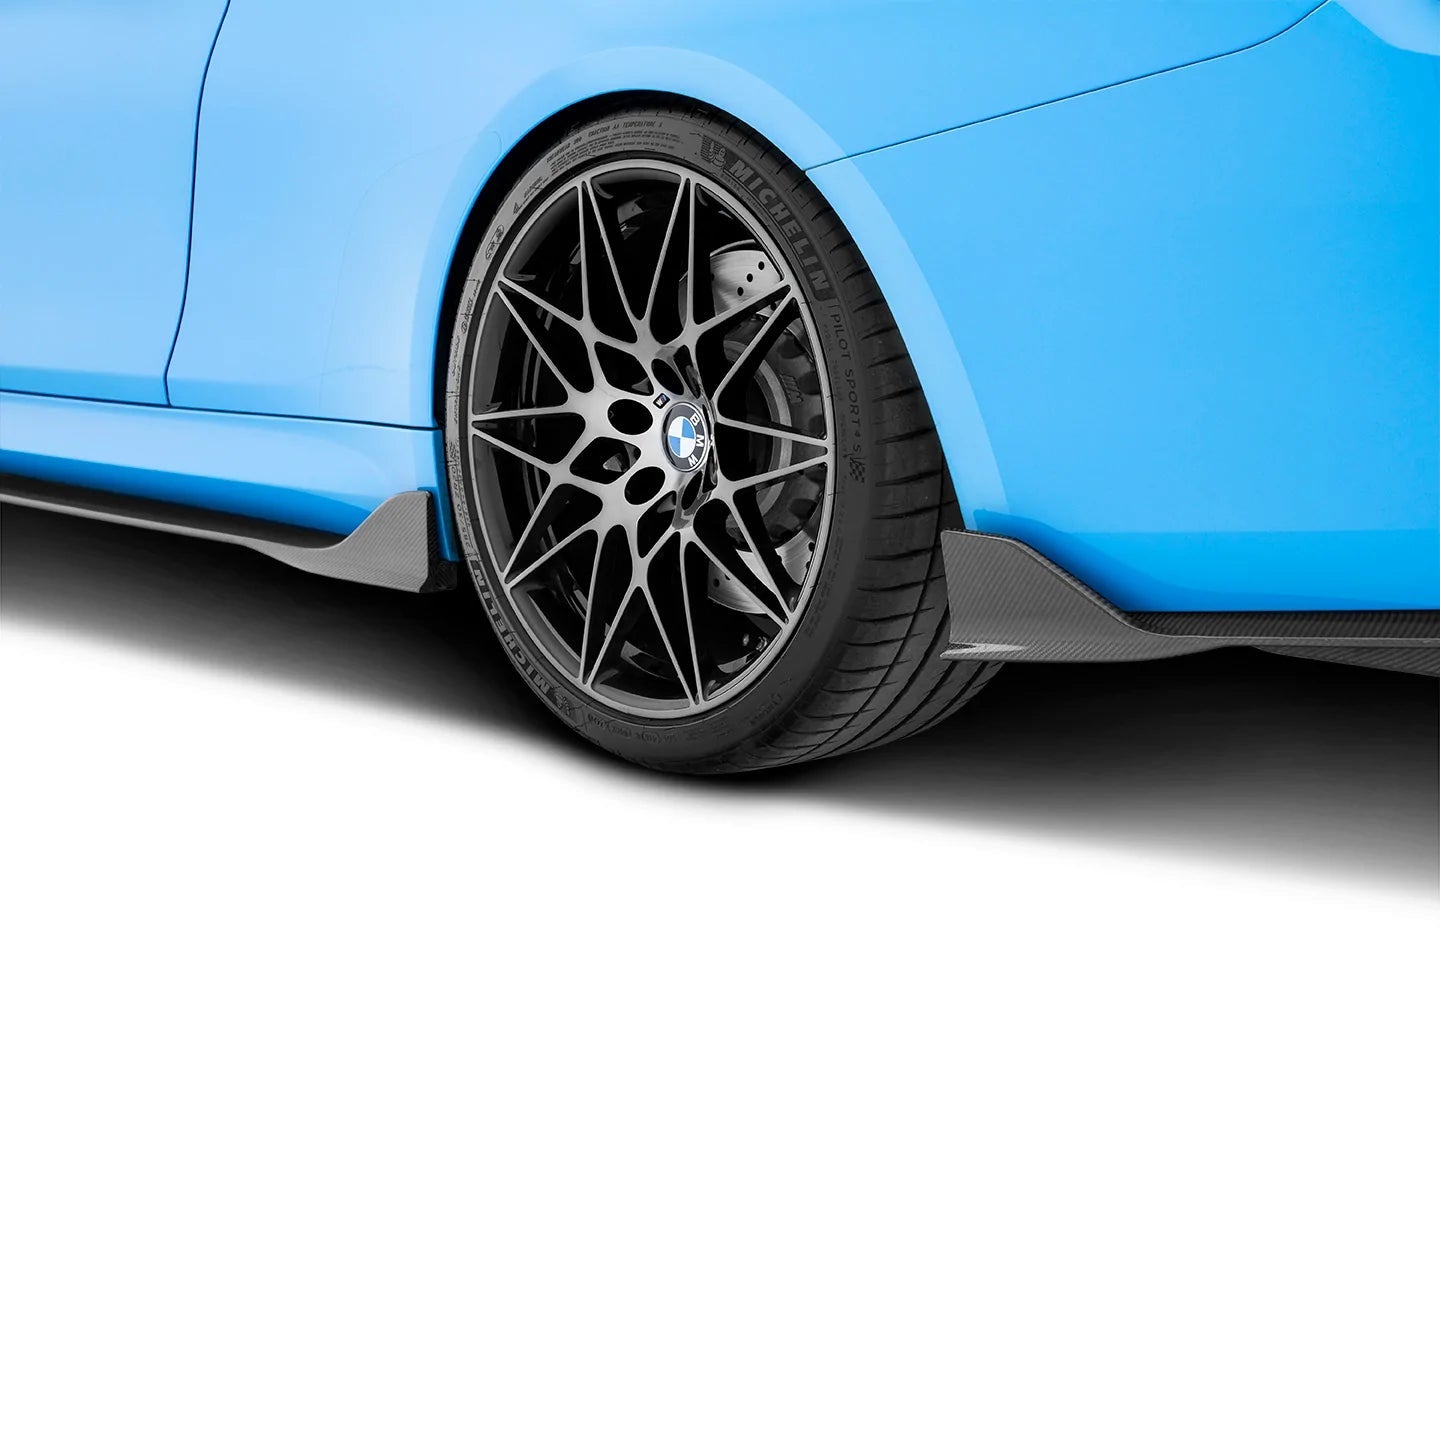 BMW M4 F82 Pre-Preg Carbon Fibre Rear Trunk Spoiler by Adro (2014